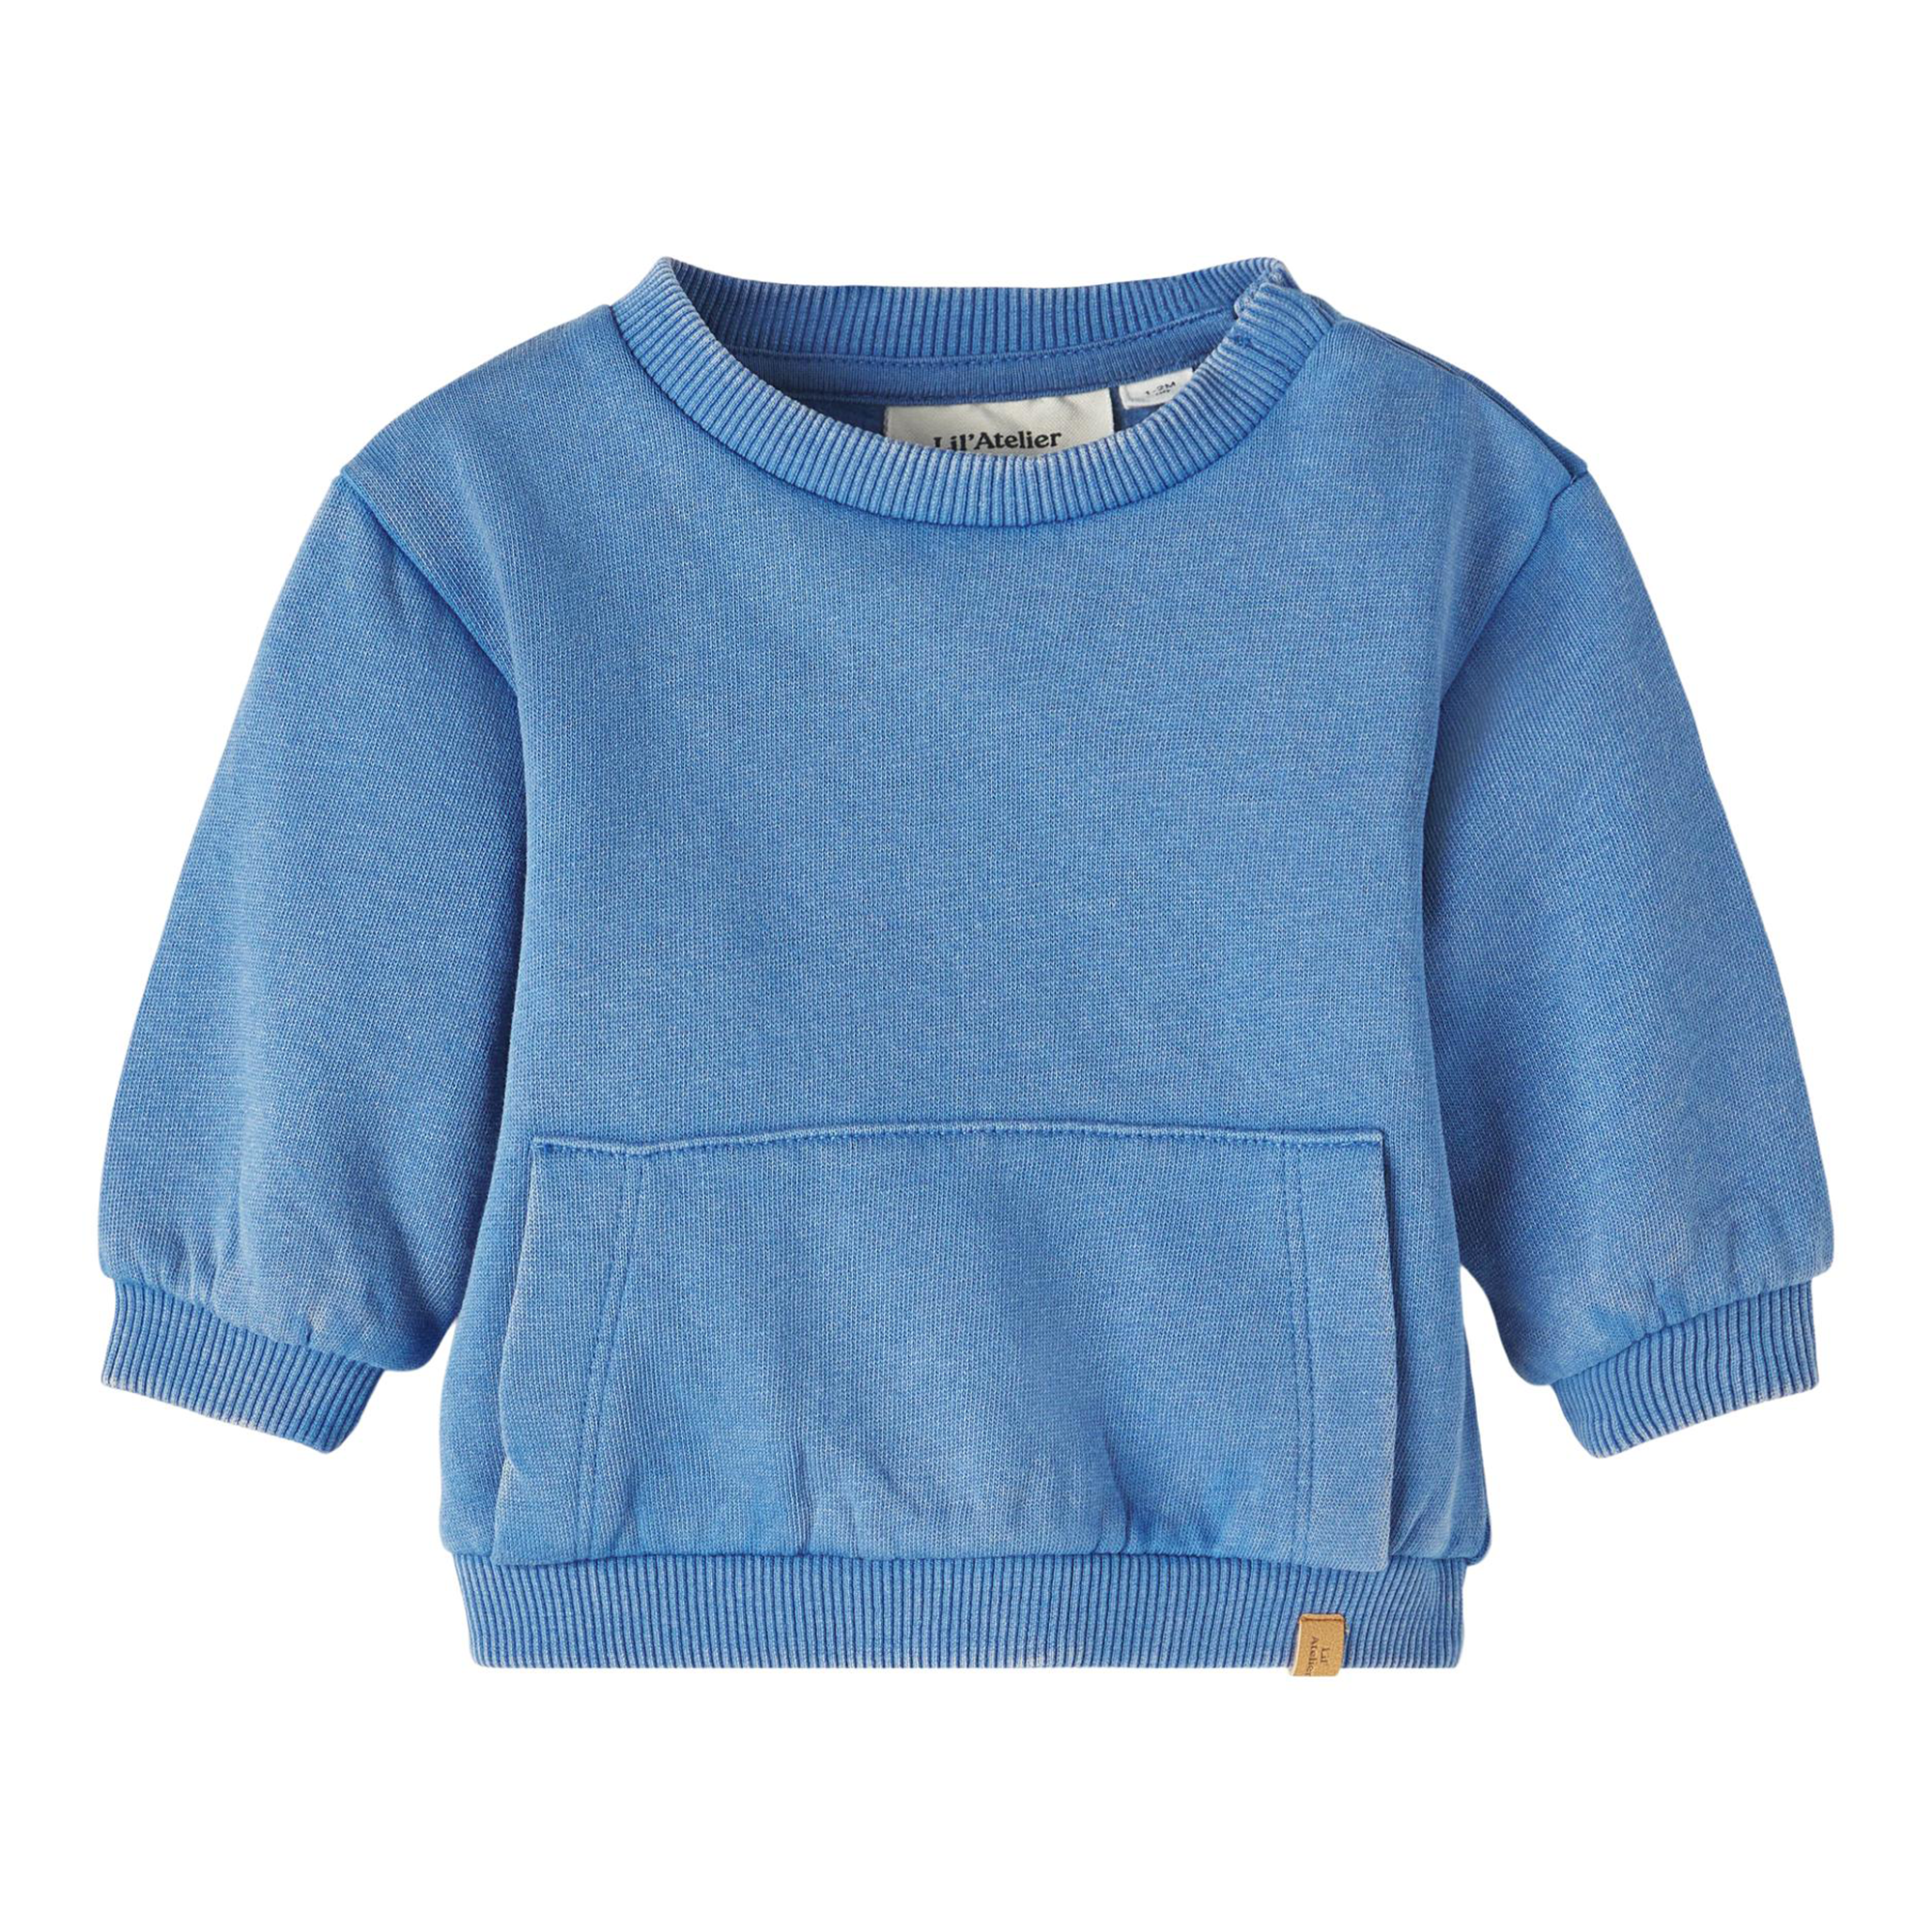 Sweatshirt Lil' Atelier Blau Blau M2000585004606 1